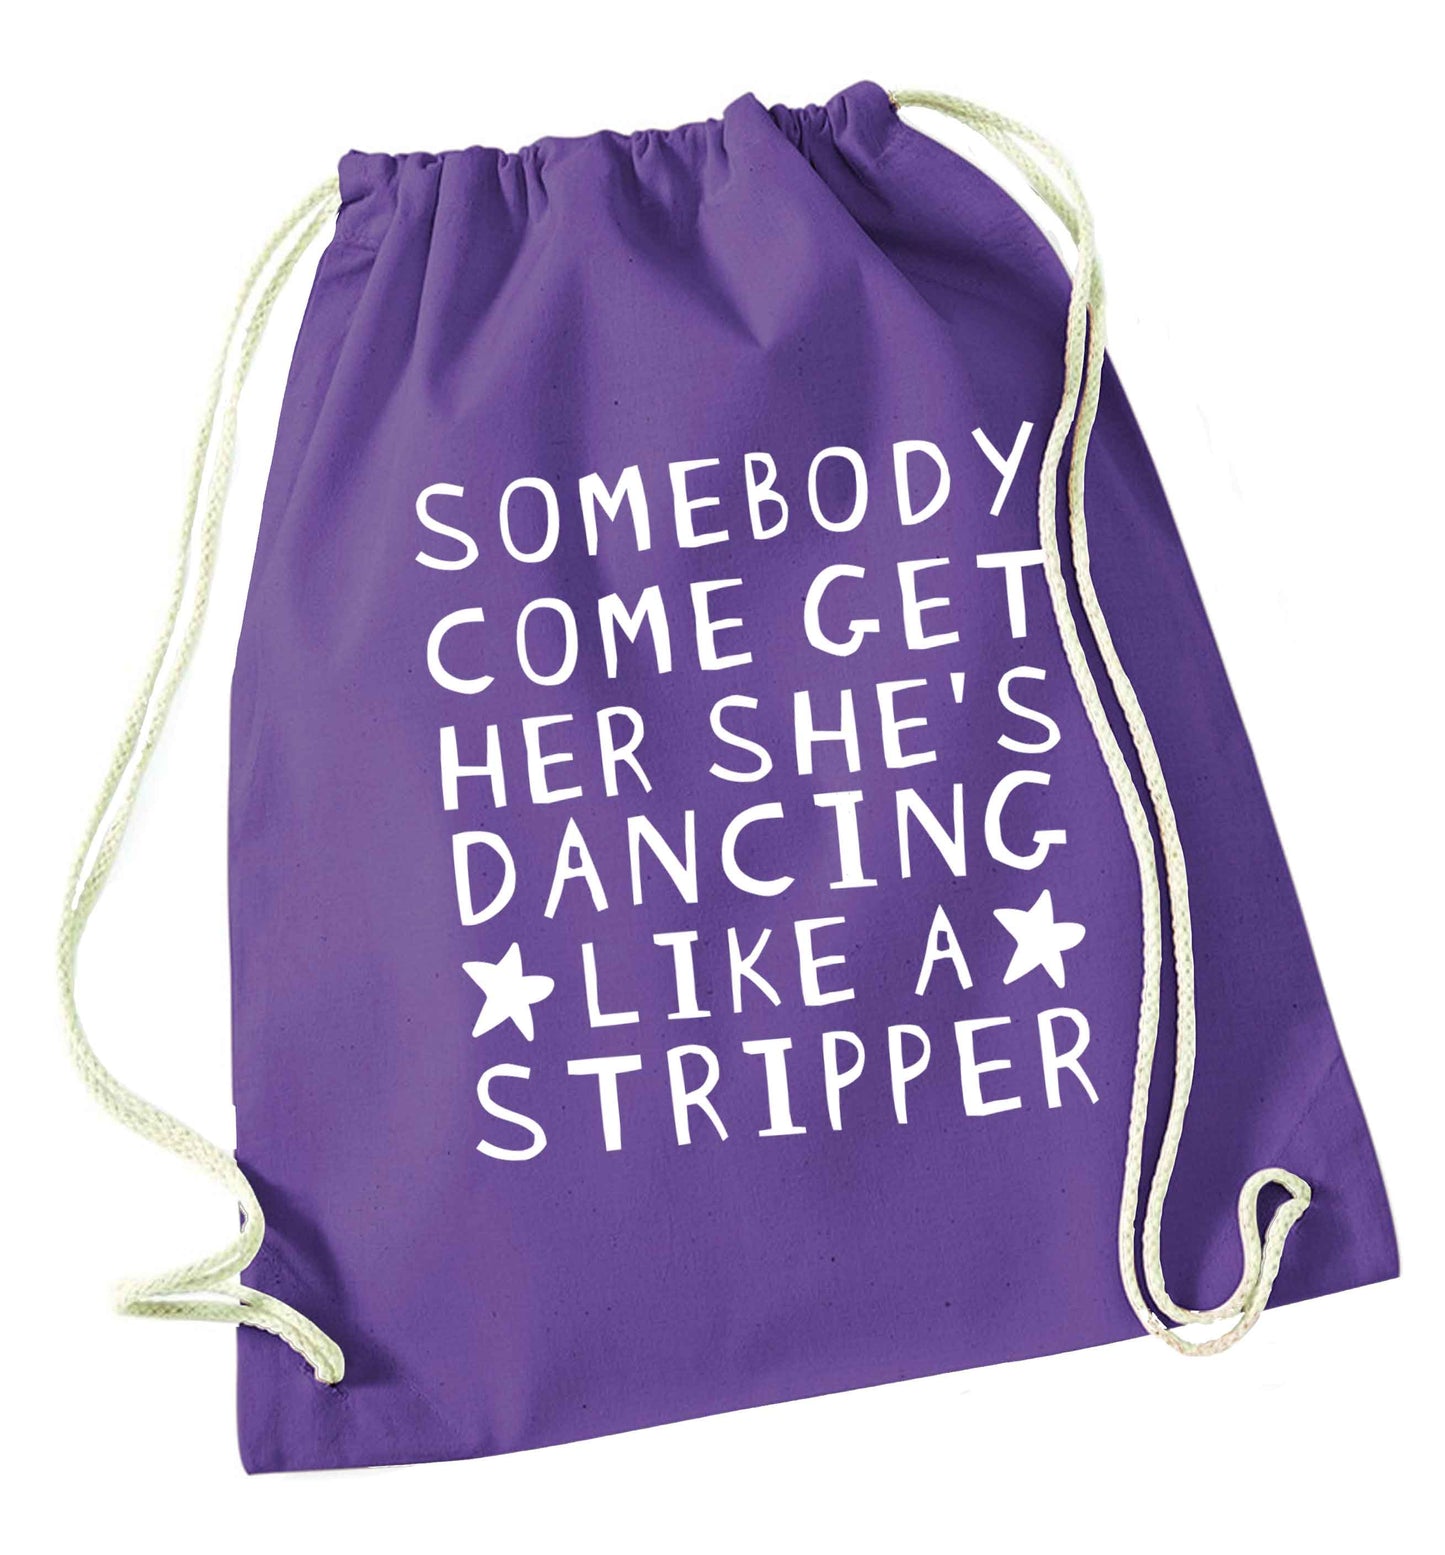 Gen Z funny viral meme  purple drawstring bag